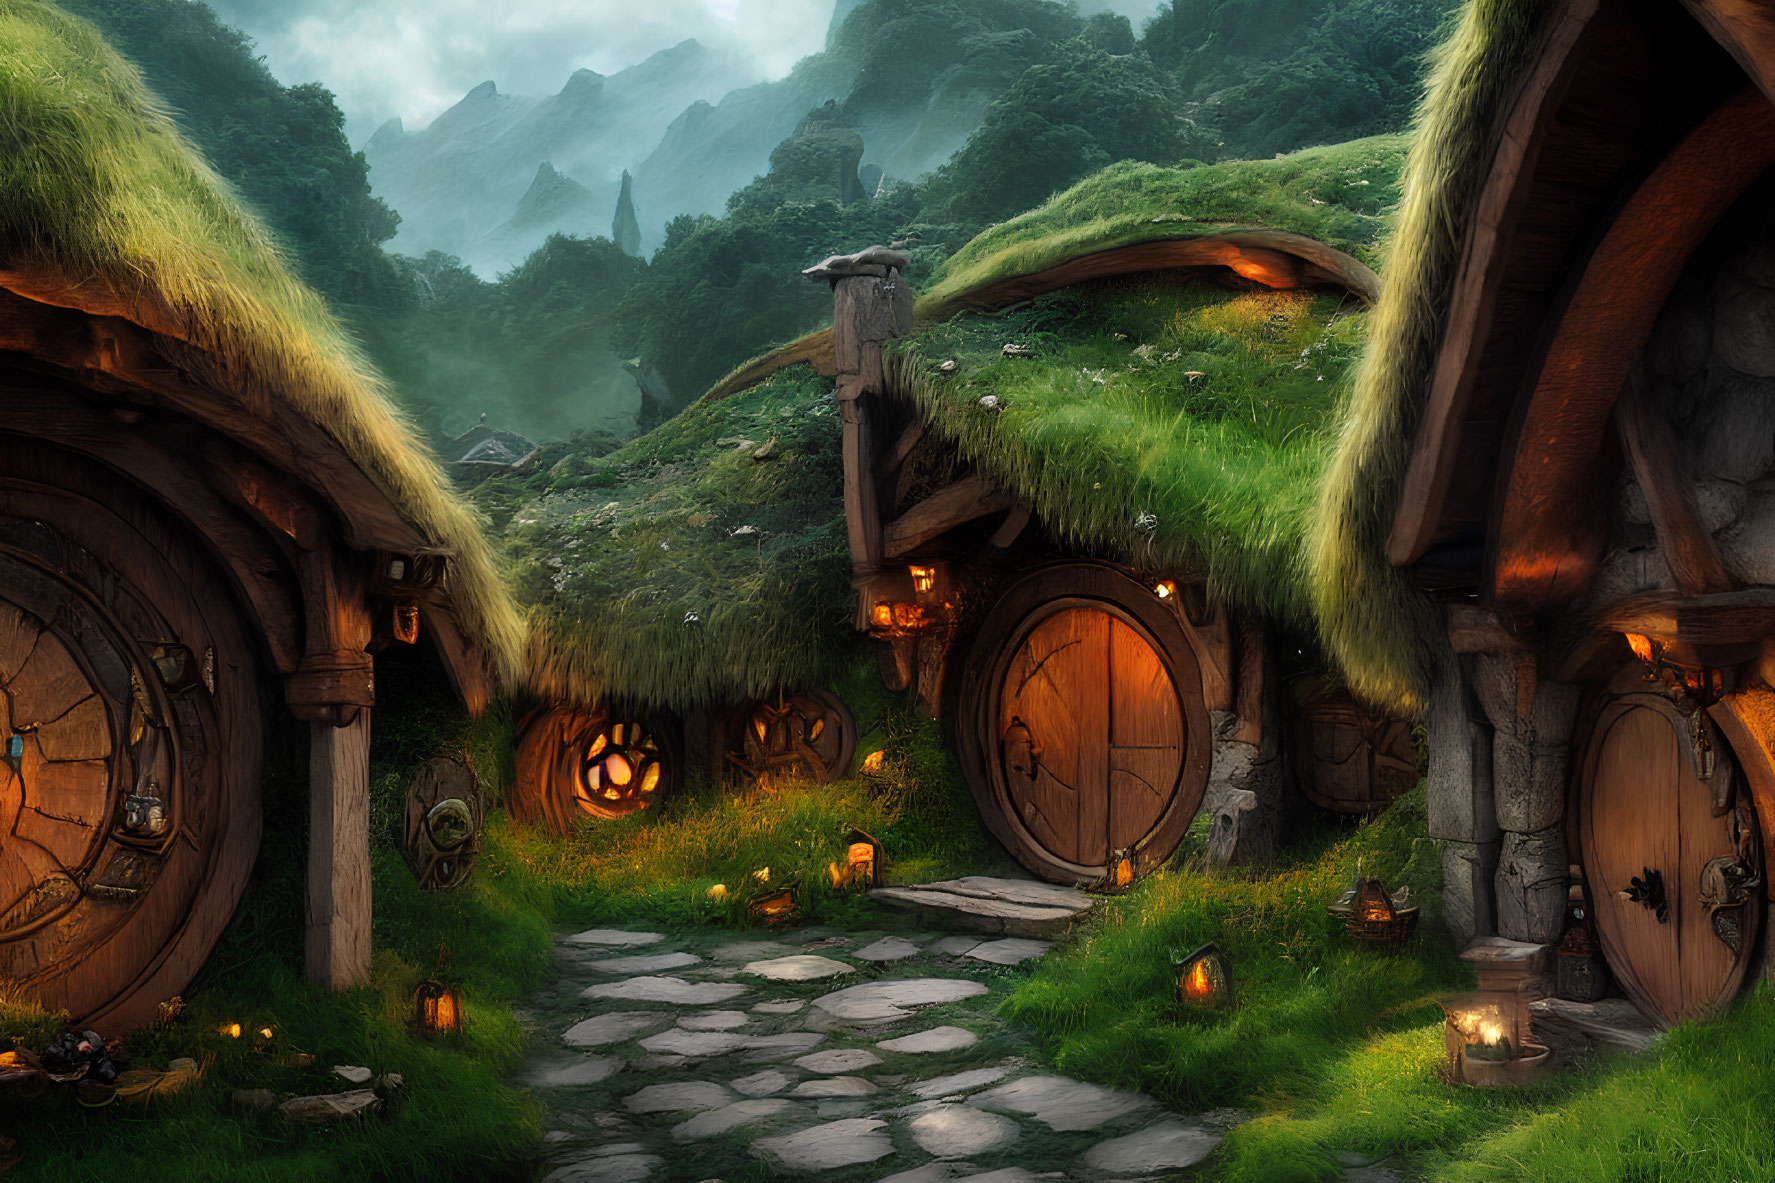 Fantasy landscape: Cozy hobbit-like houses in lush green setting at dusk